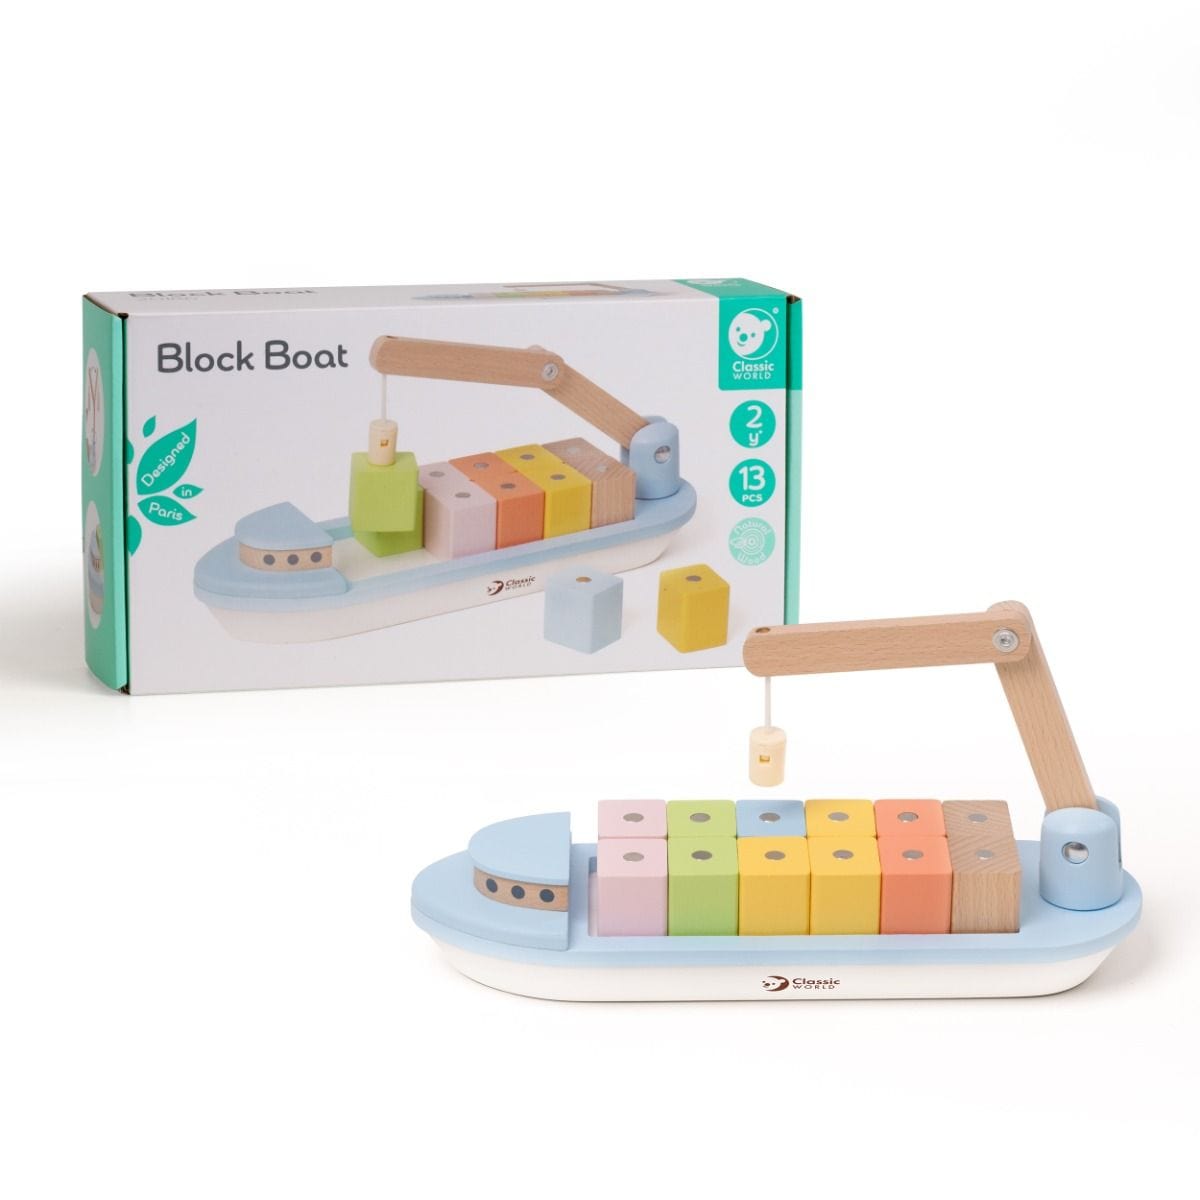 Classic World Toys Block Boat